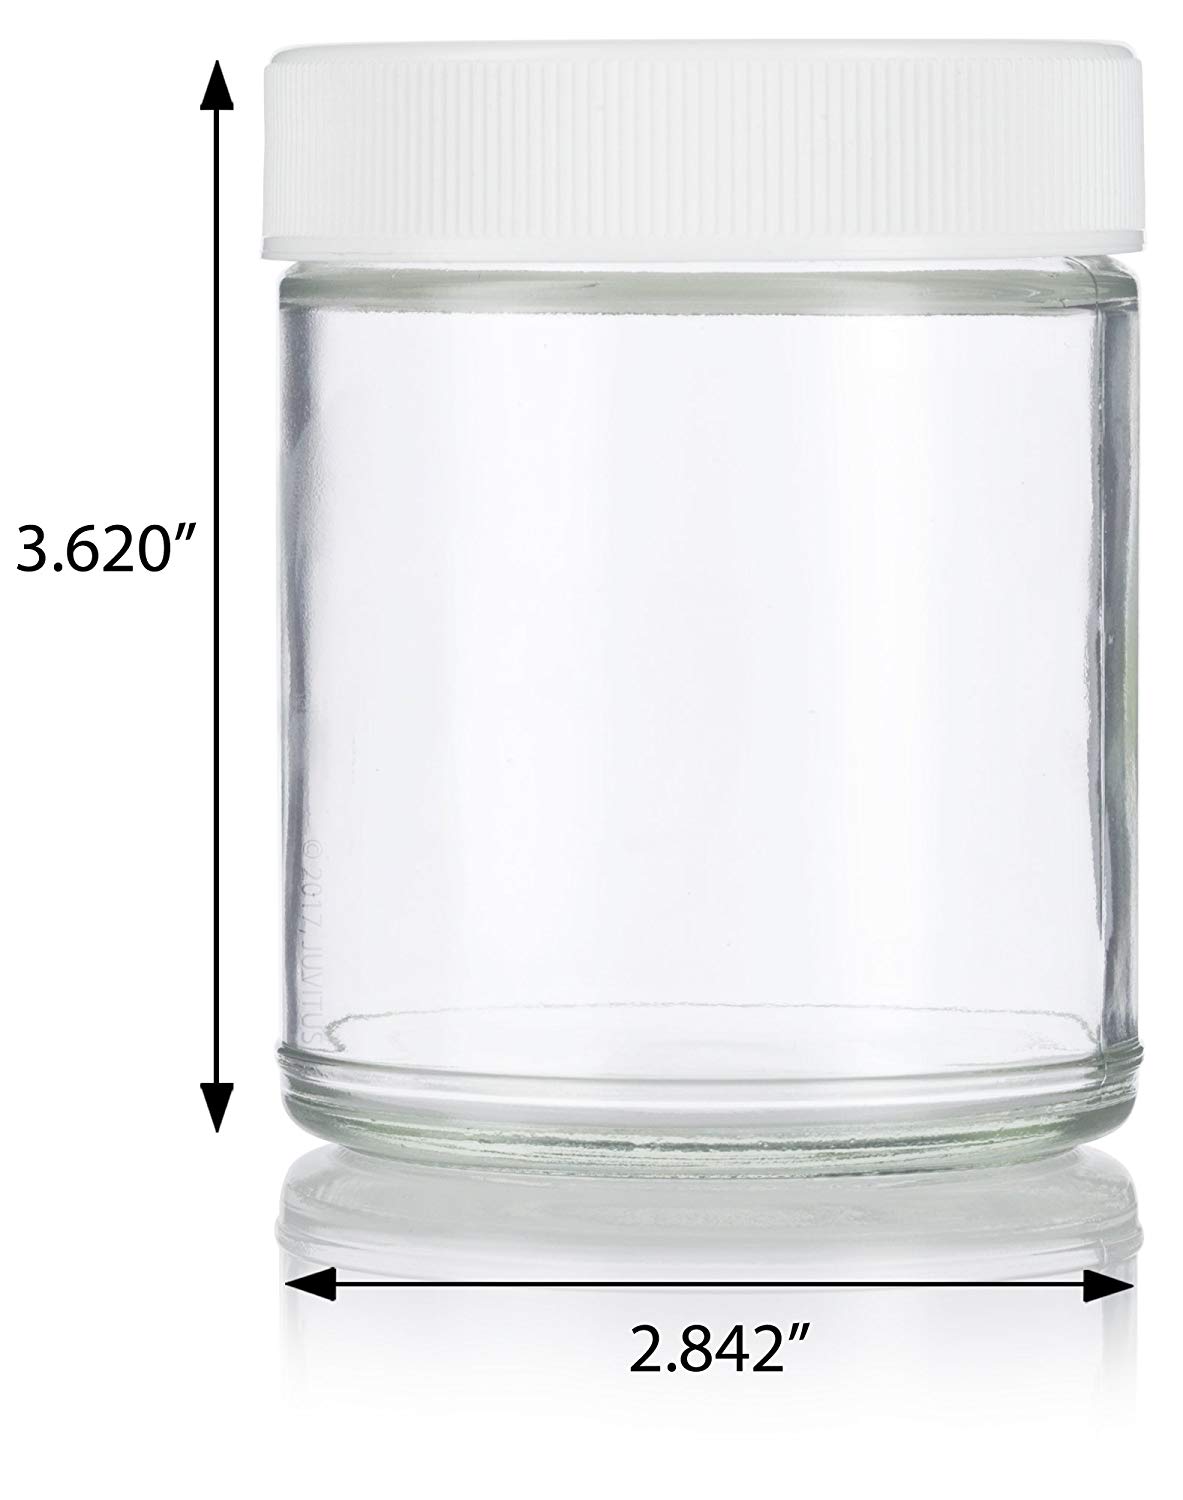  6 oz Clear Glass Jars